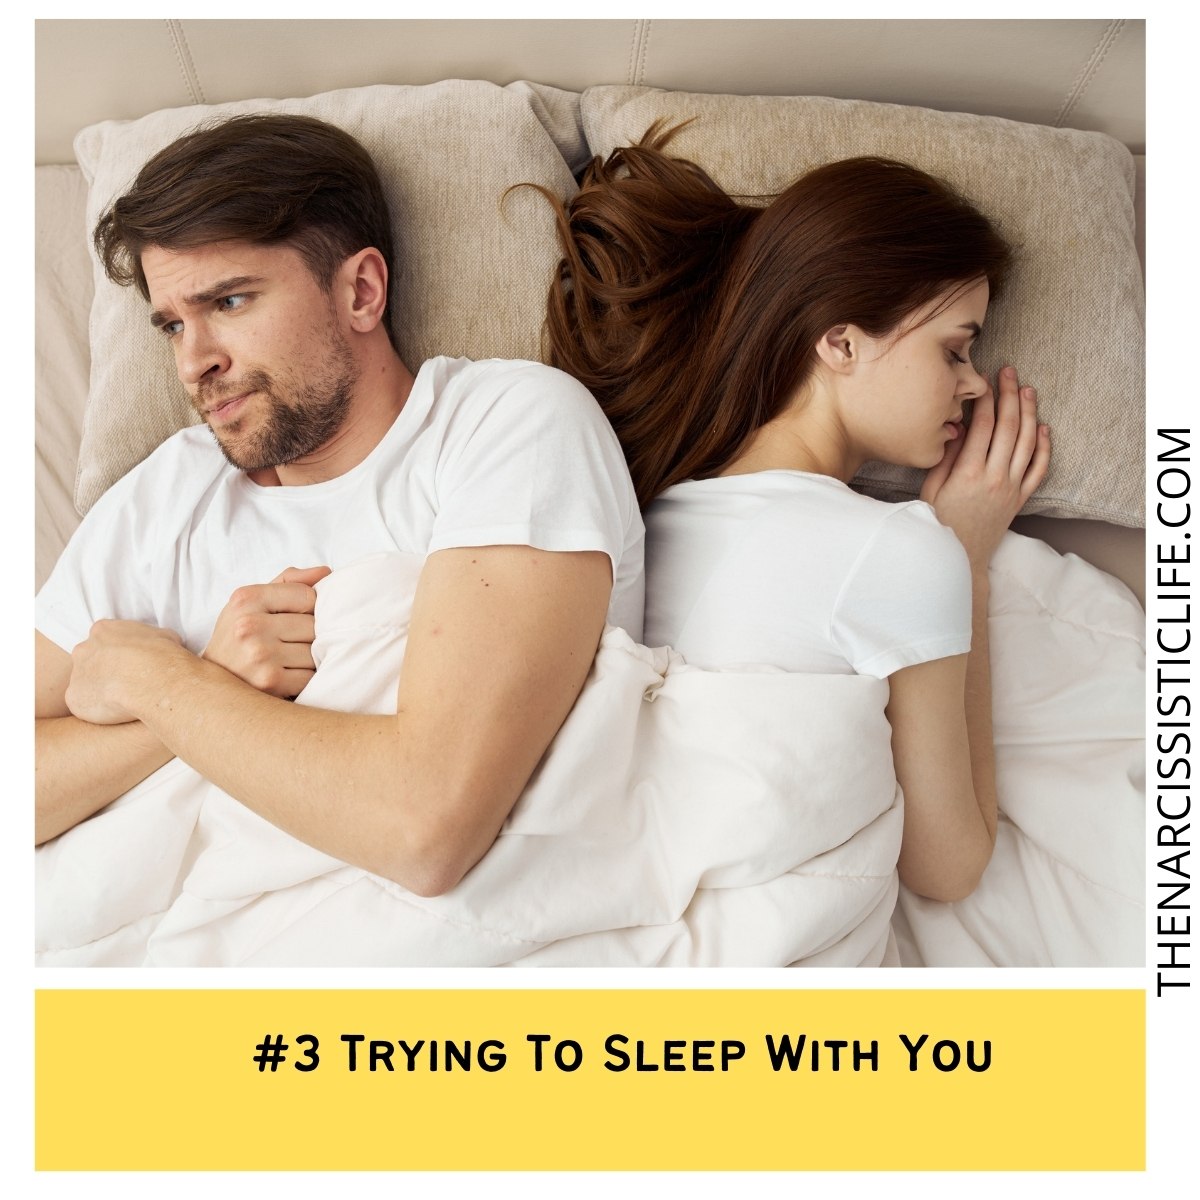 should i sleep with my ex husband